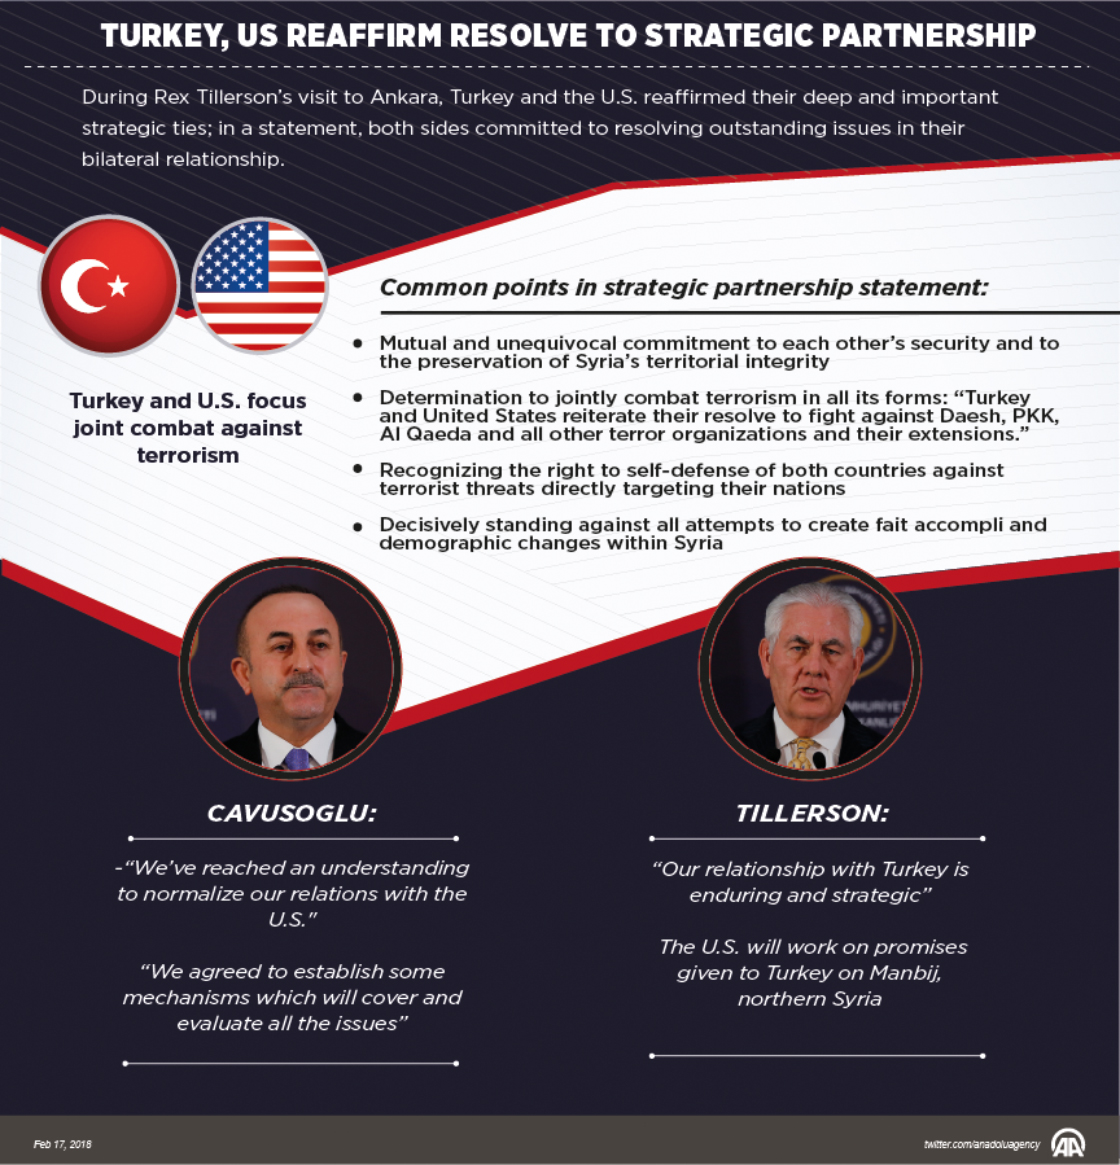 Turkey, US reaffirm resolve to strategic partnership